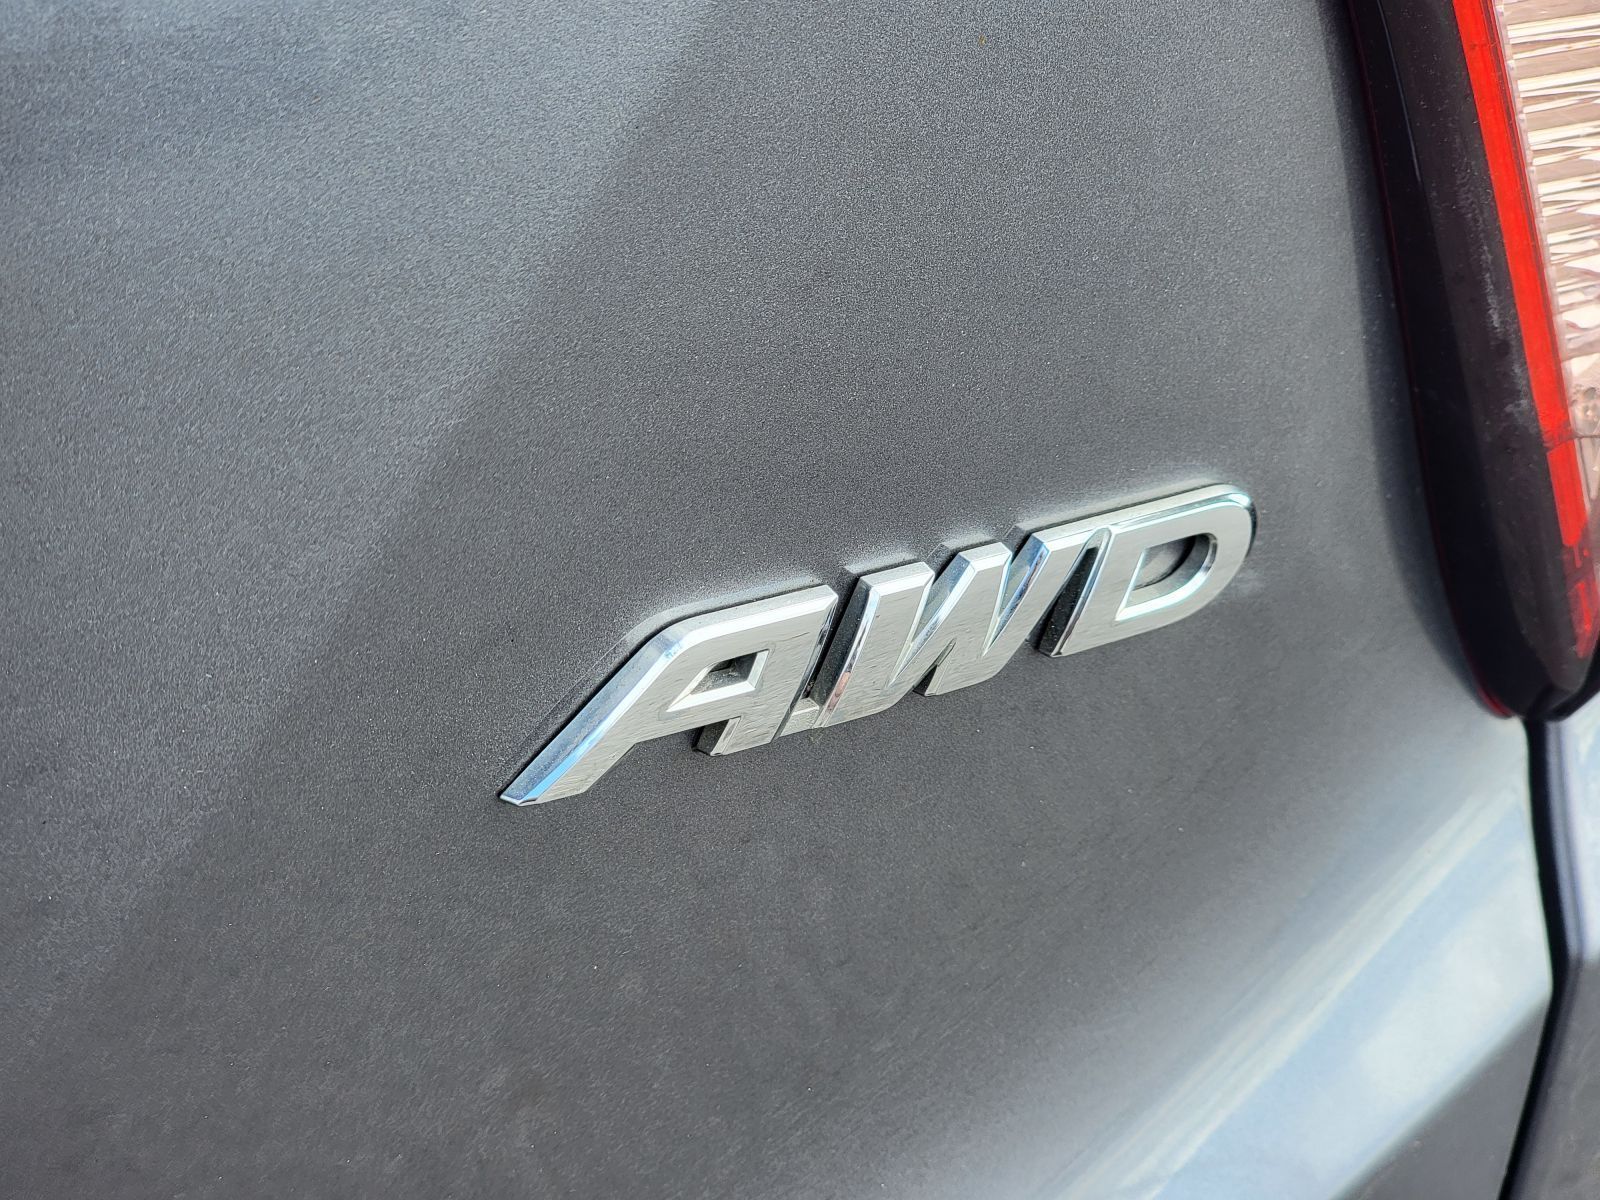 Used, 2016 Honda HR-V AWD 4dr CVT EX-L w/Navi, Silver, 13970-7